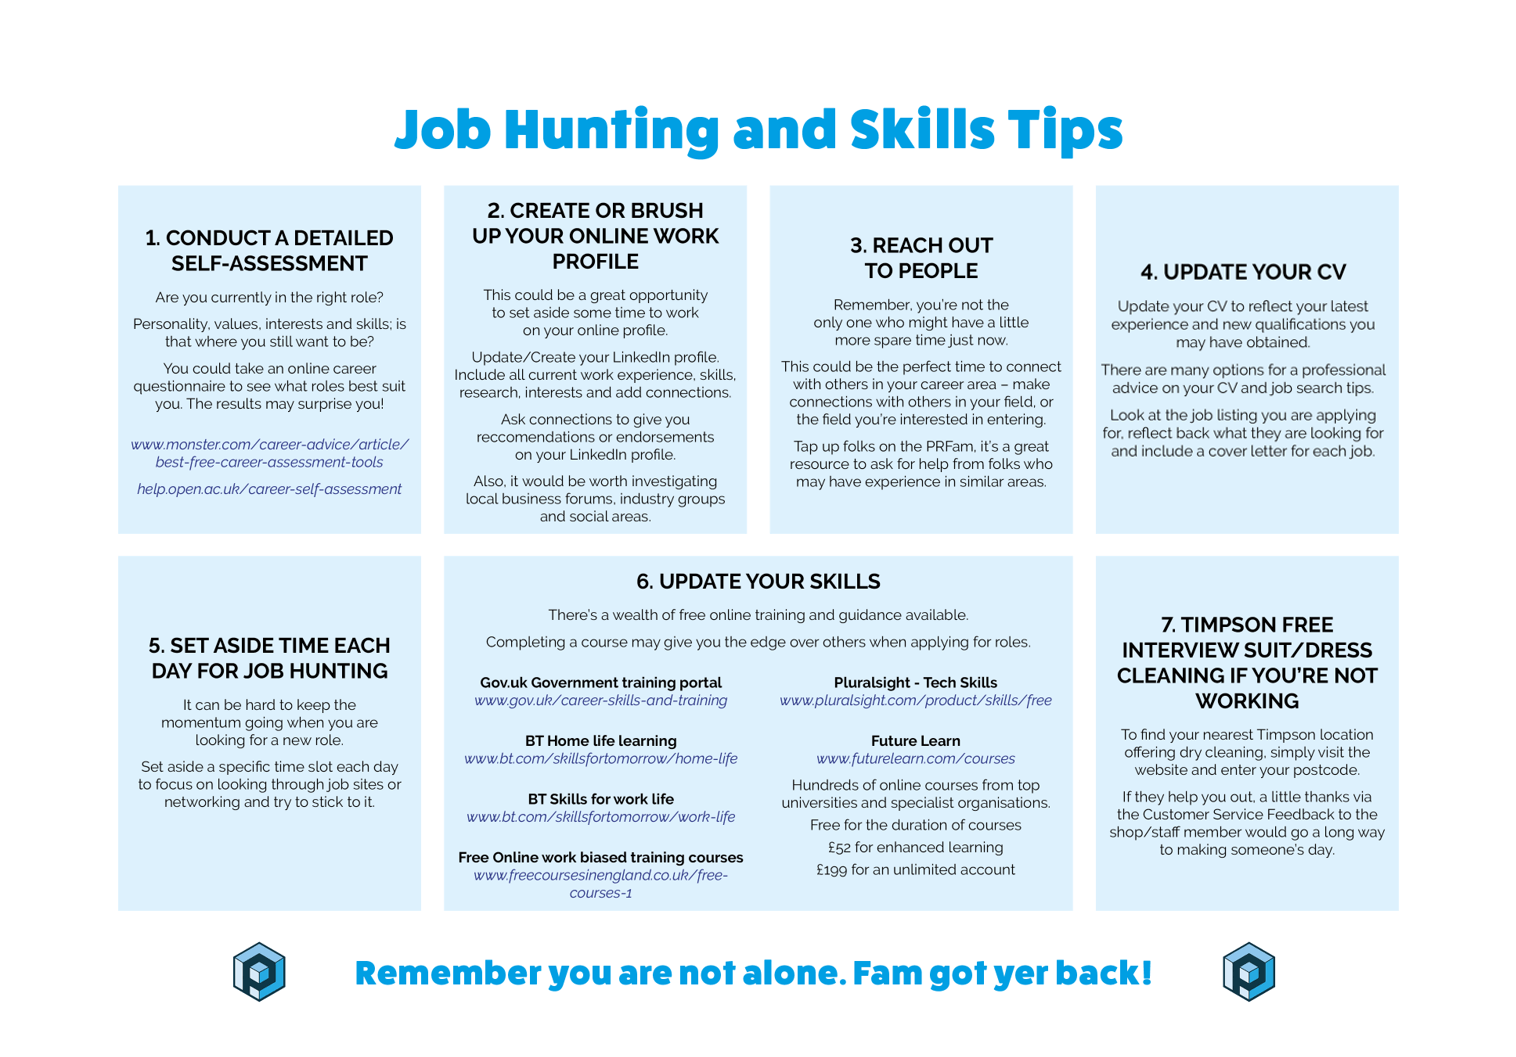 Job Hunting and Skills Tips on Monday Motivation